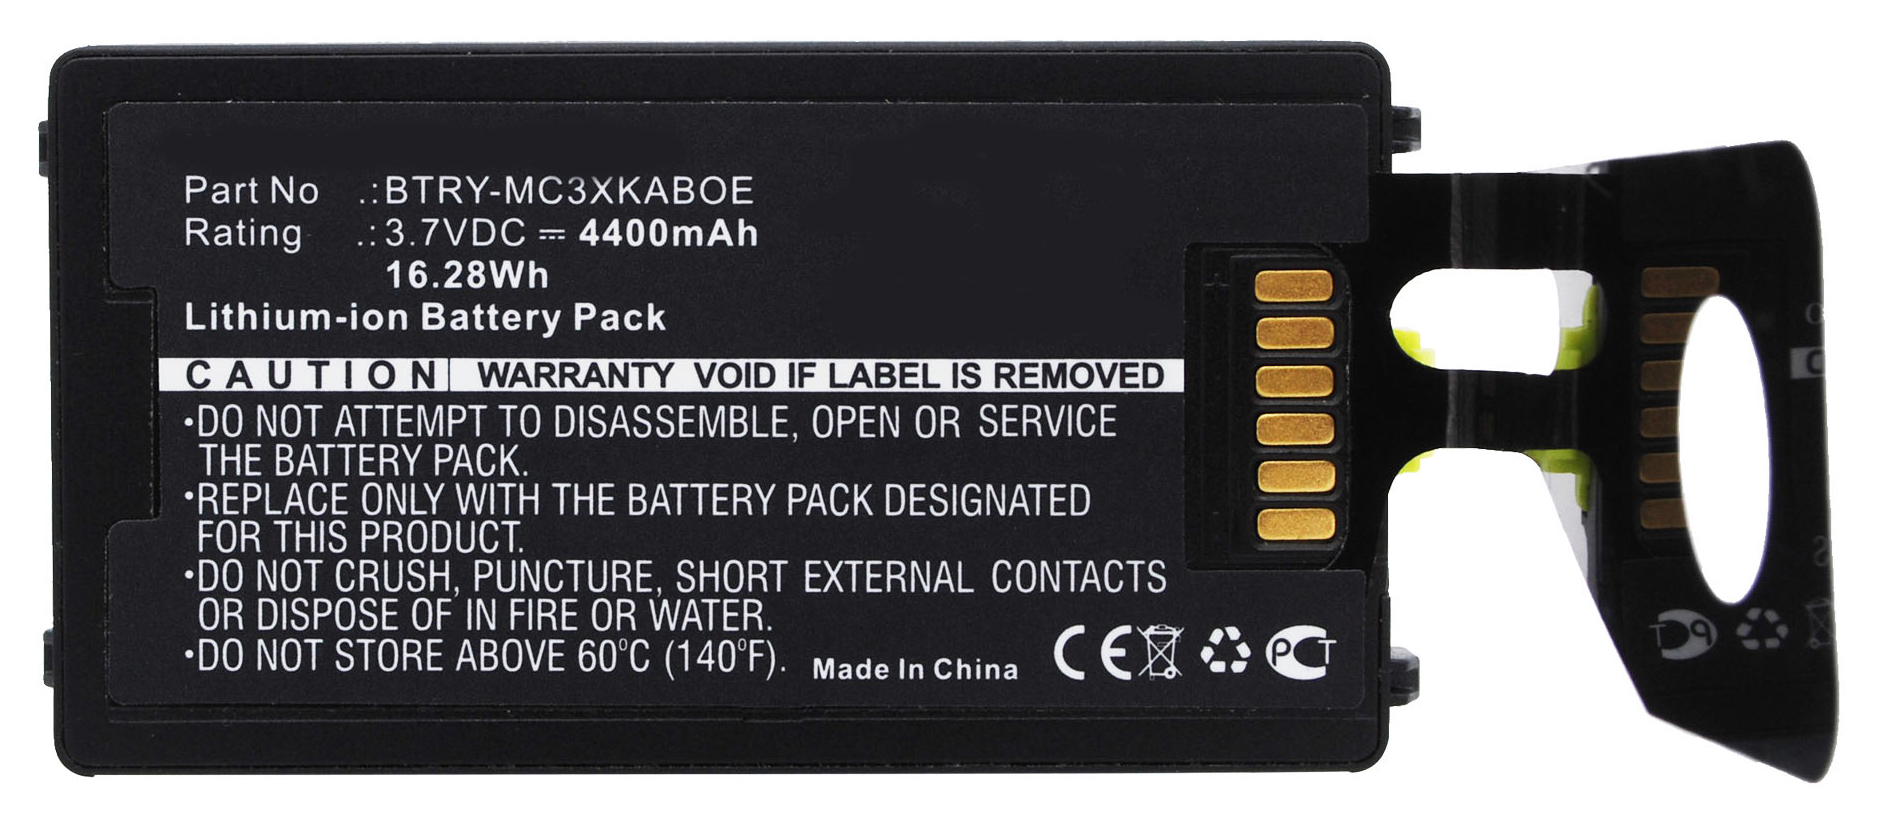 Batteries for ZebraBarcode Scanner